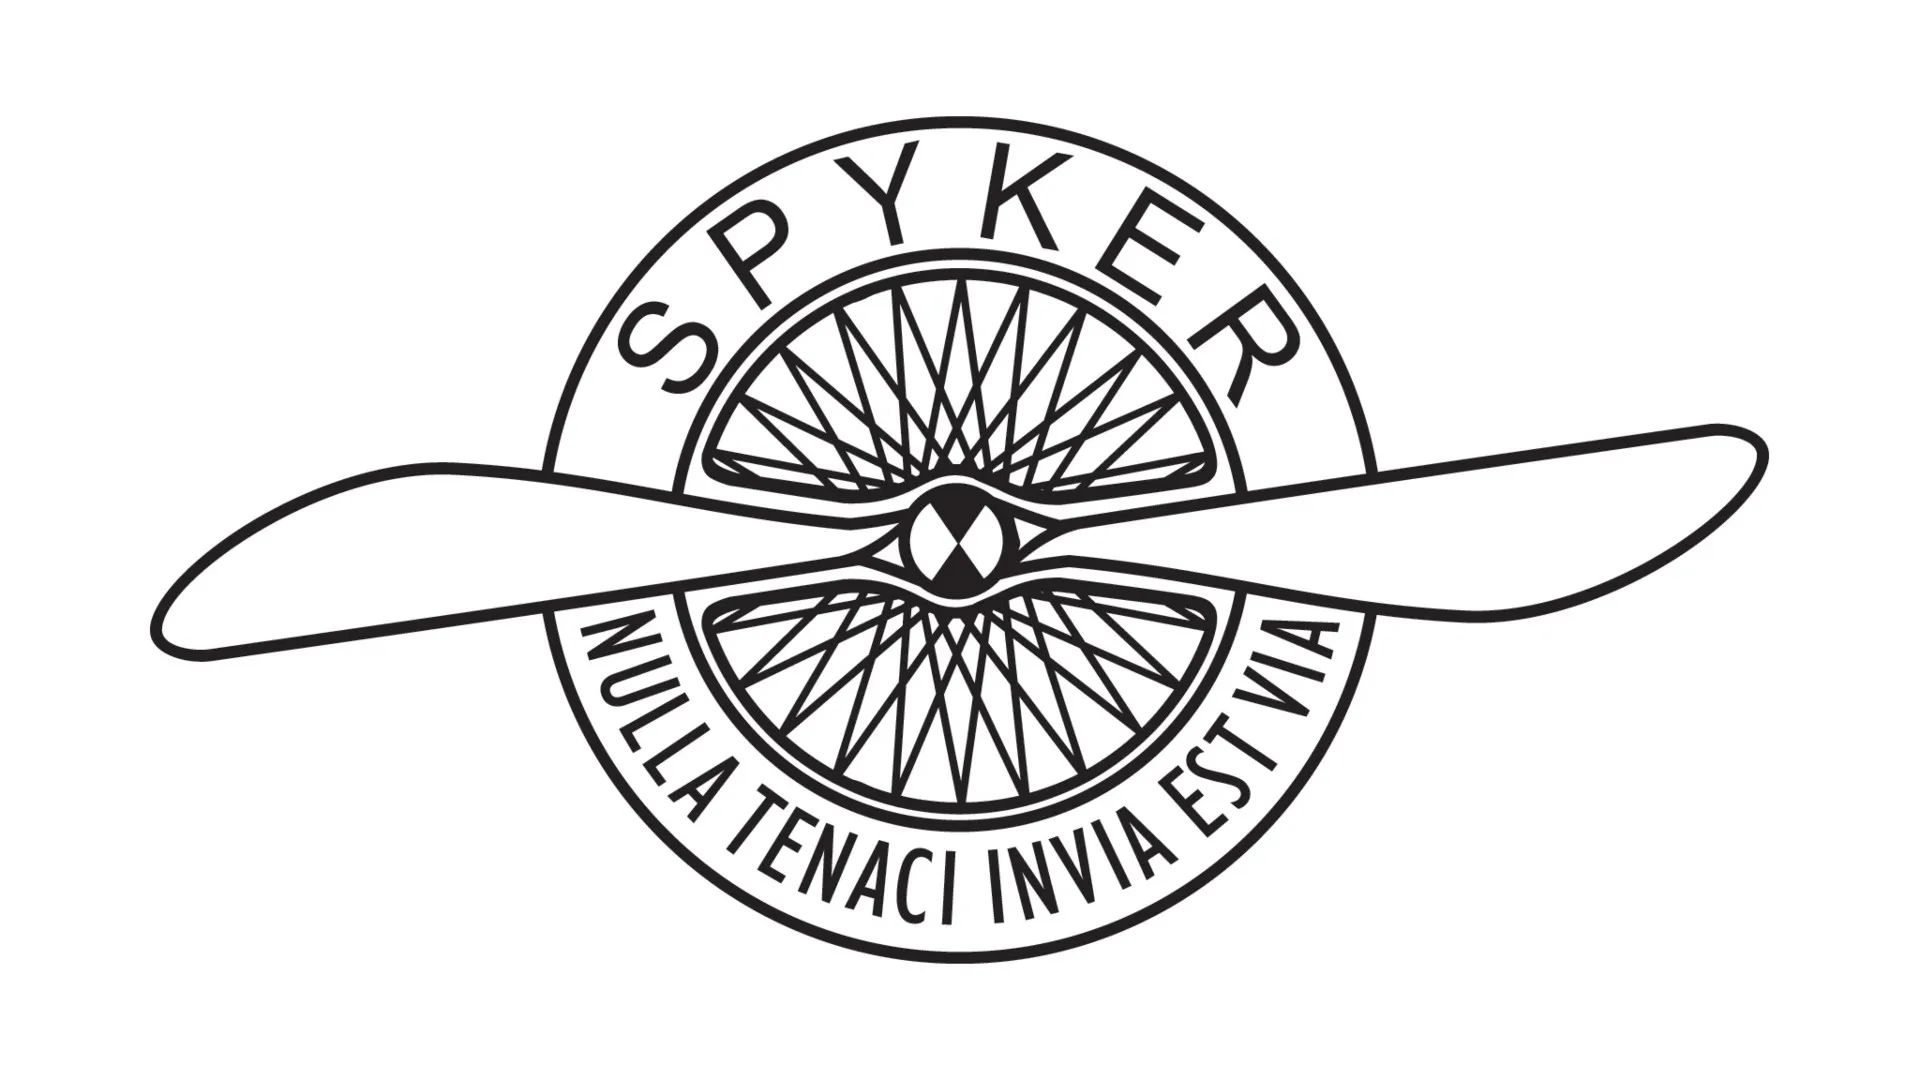 Spyker volverá a fabricar en 2022